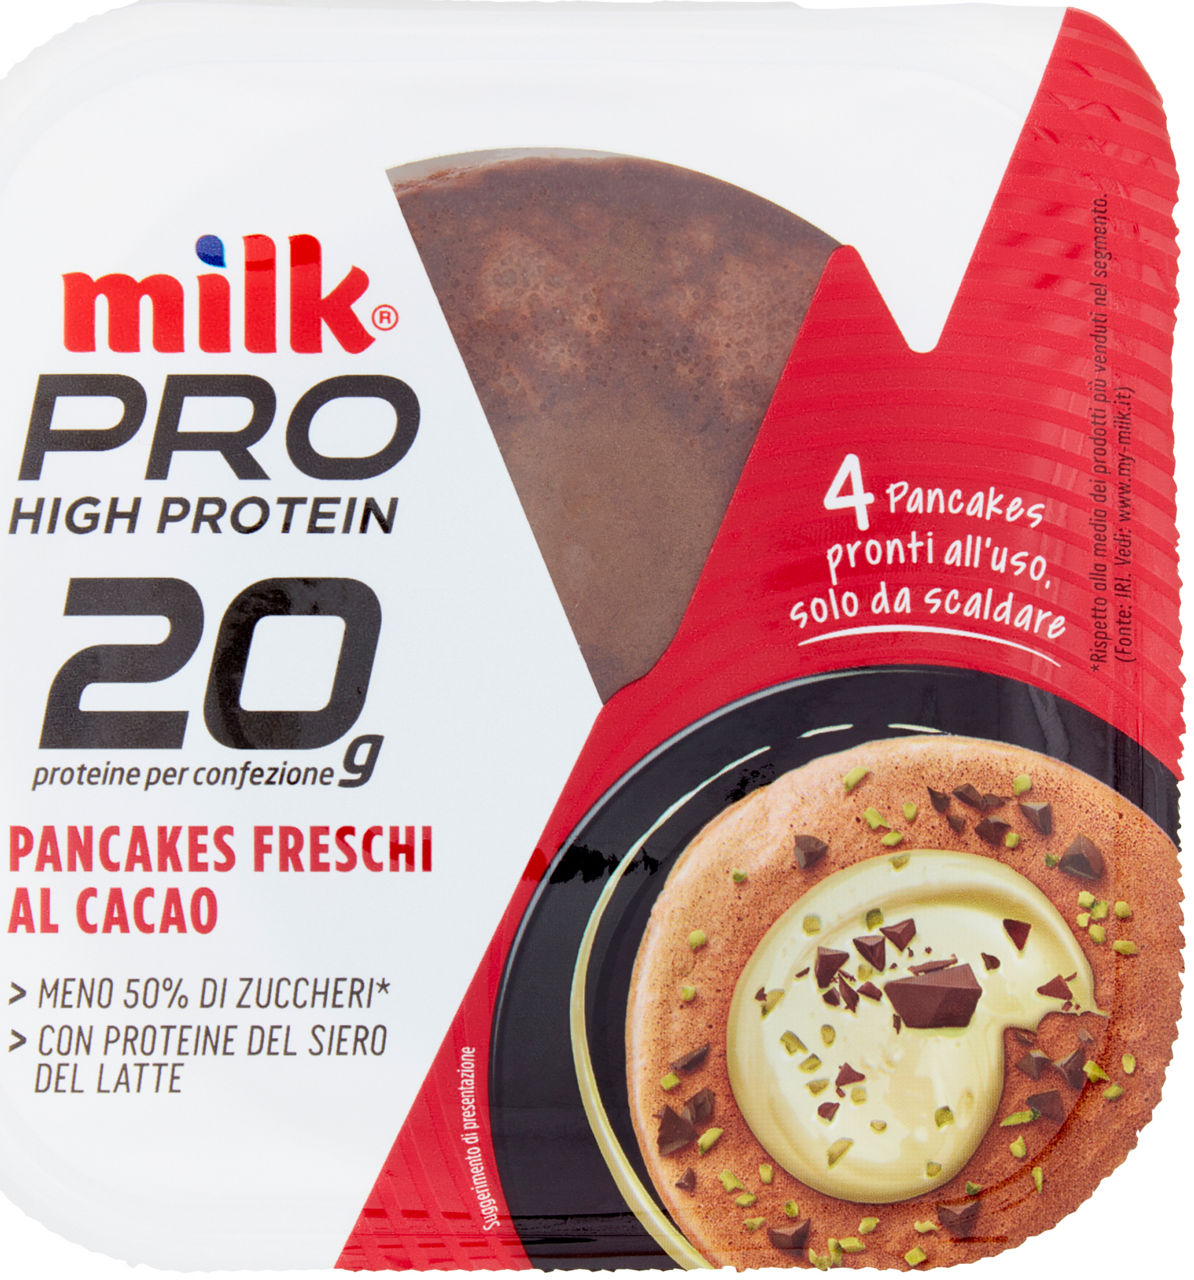 Milk pro high protein pancakes cioccolato g 160